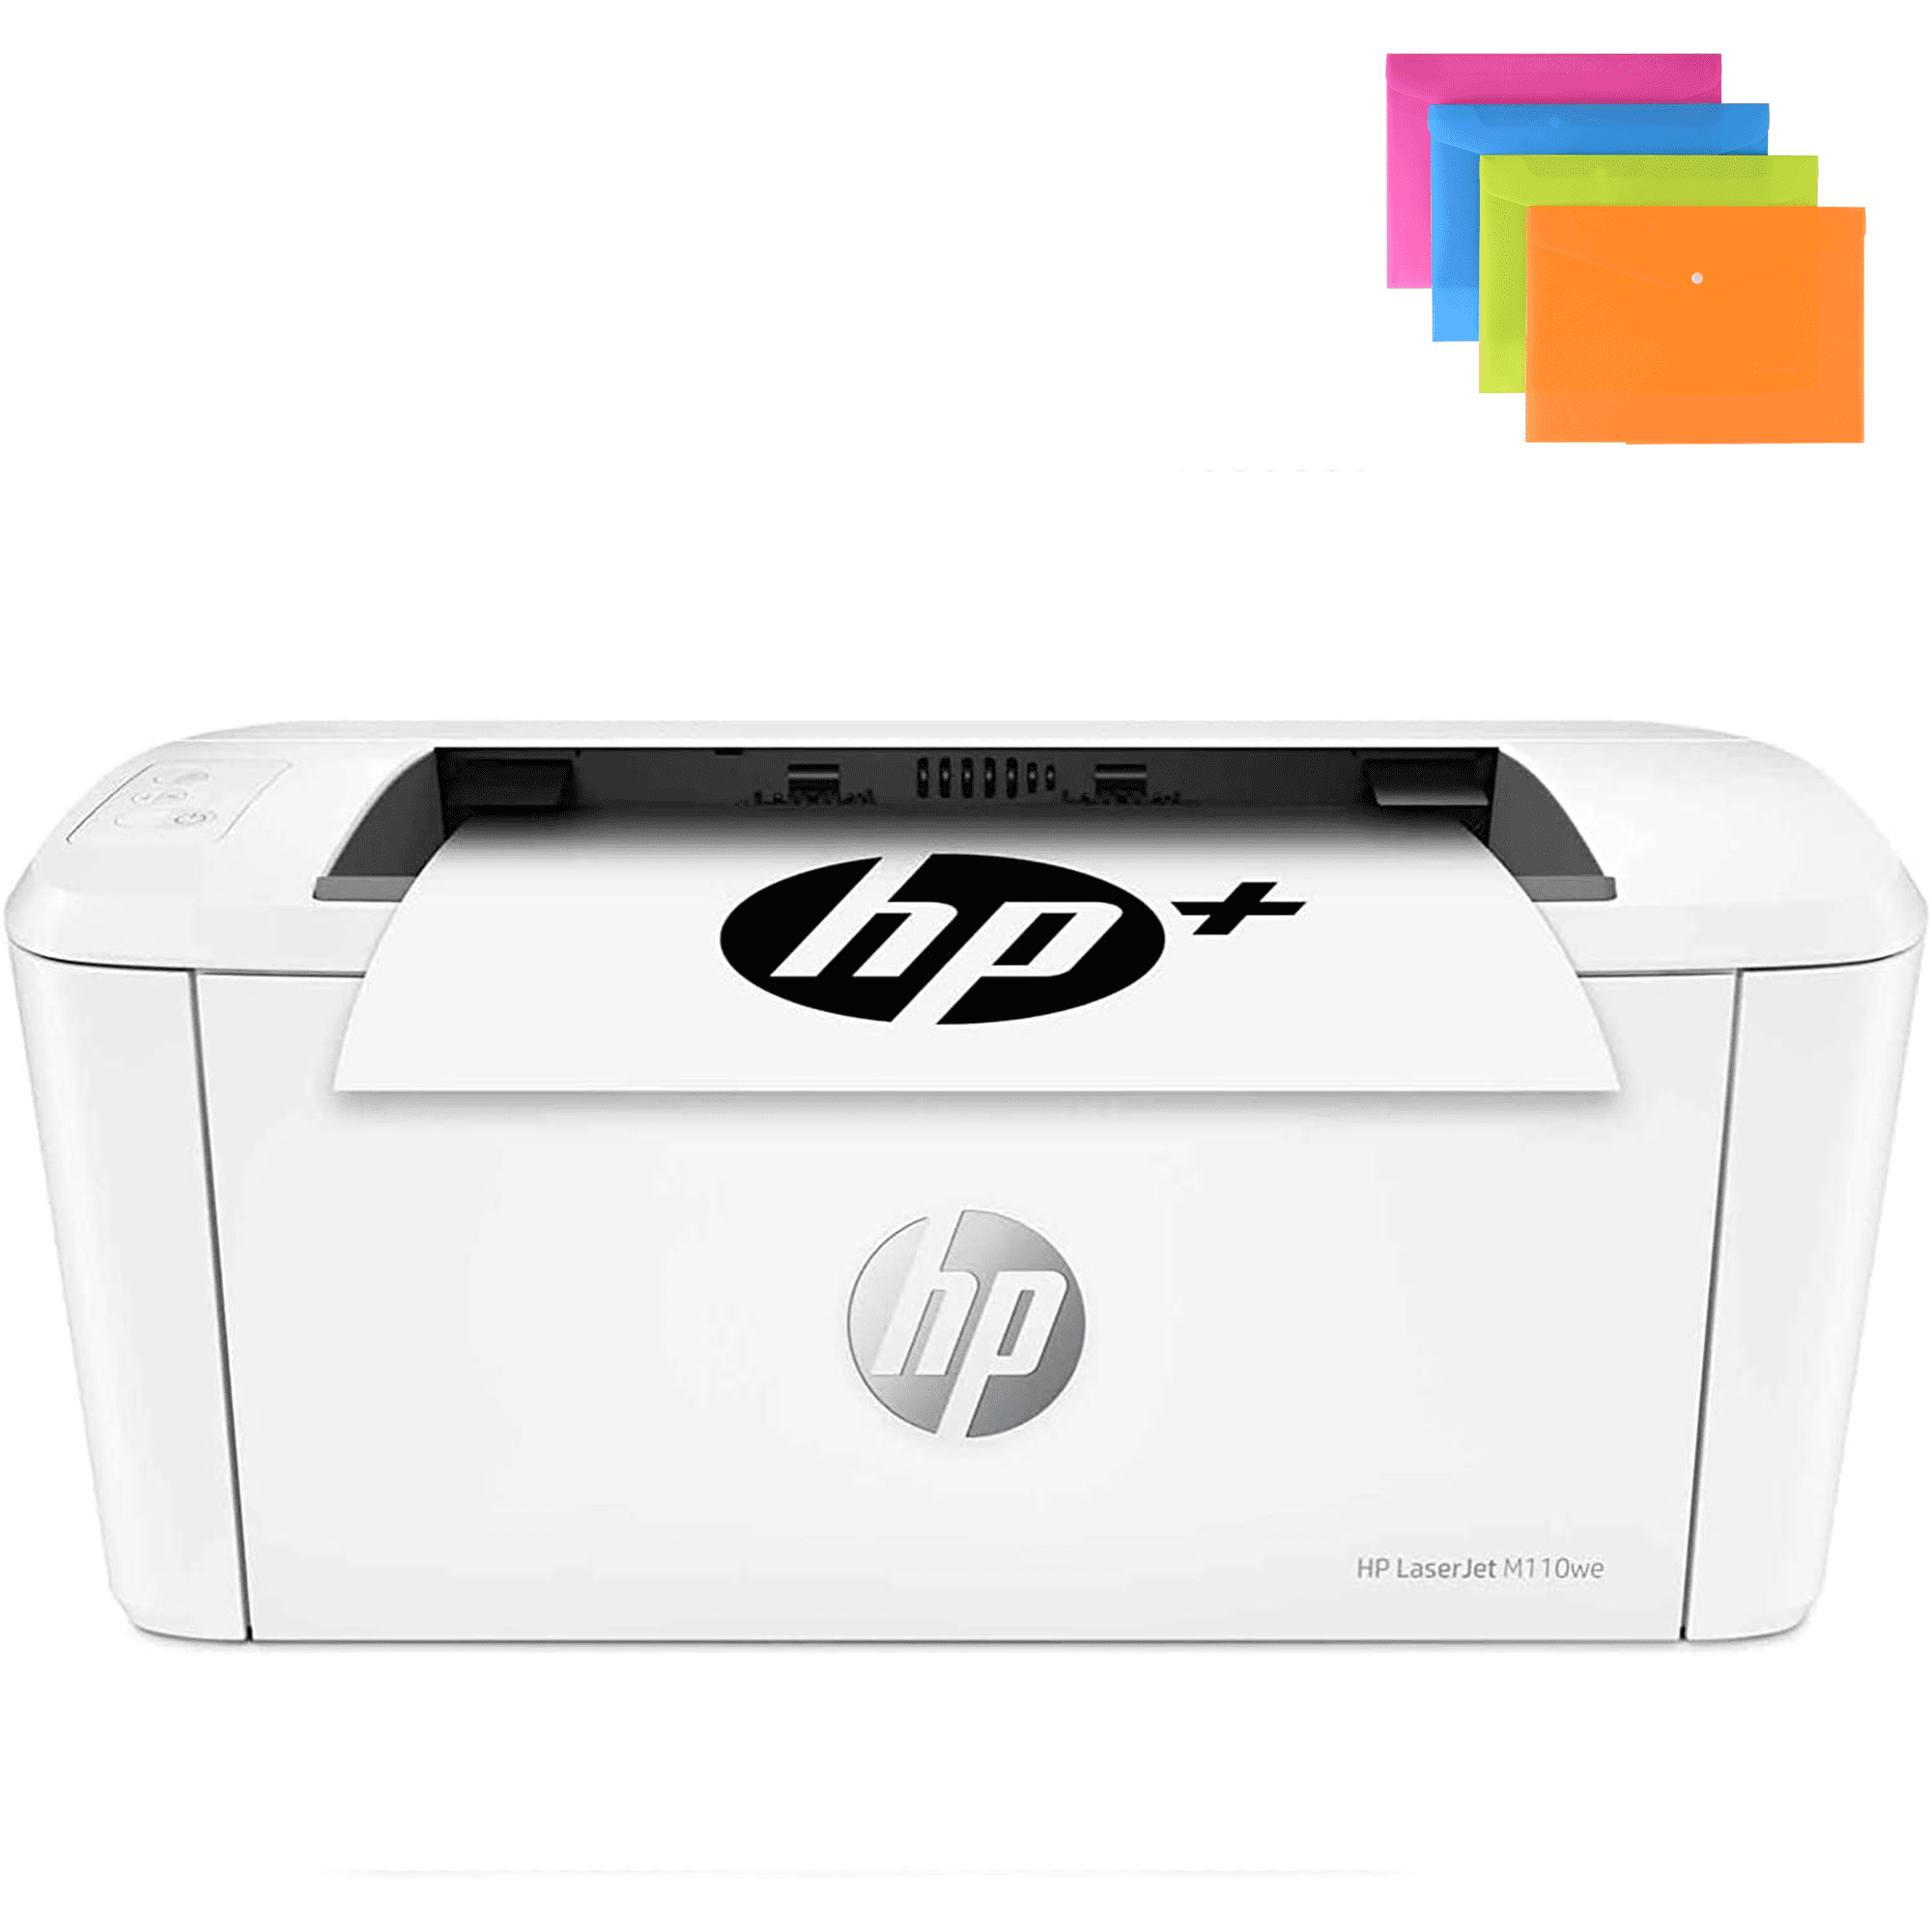 H-P Laserjet M110we Wireless Monochrome Laser Printer with HP+, Print,  Auto-On/Auto-Off Technology, 21 ppm, 600 x 600 dpi, 8.5 x 14, USB, Wi-Fi,  File Folders